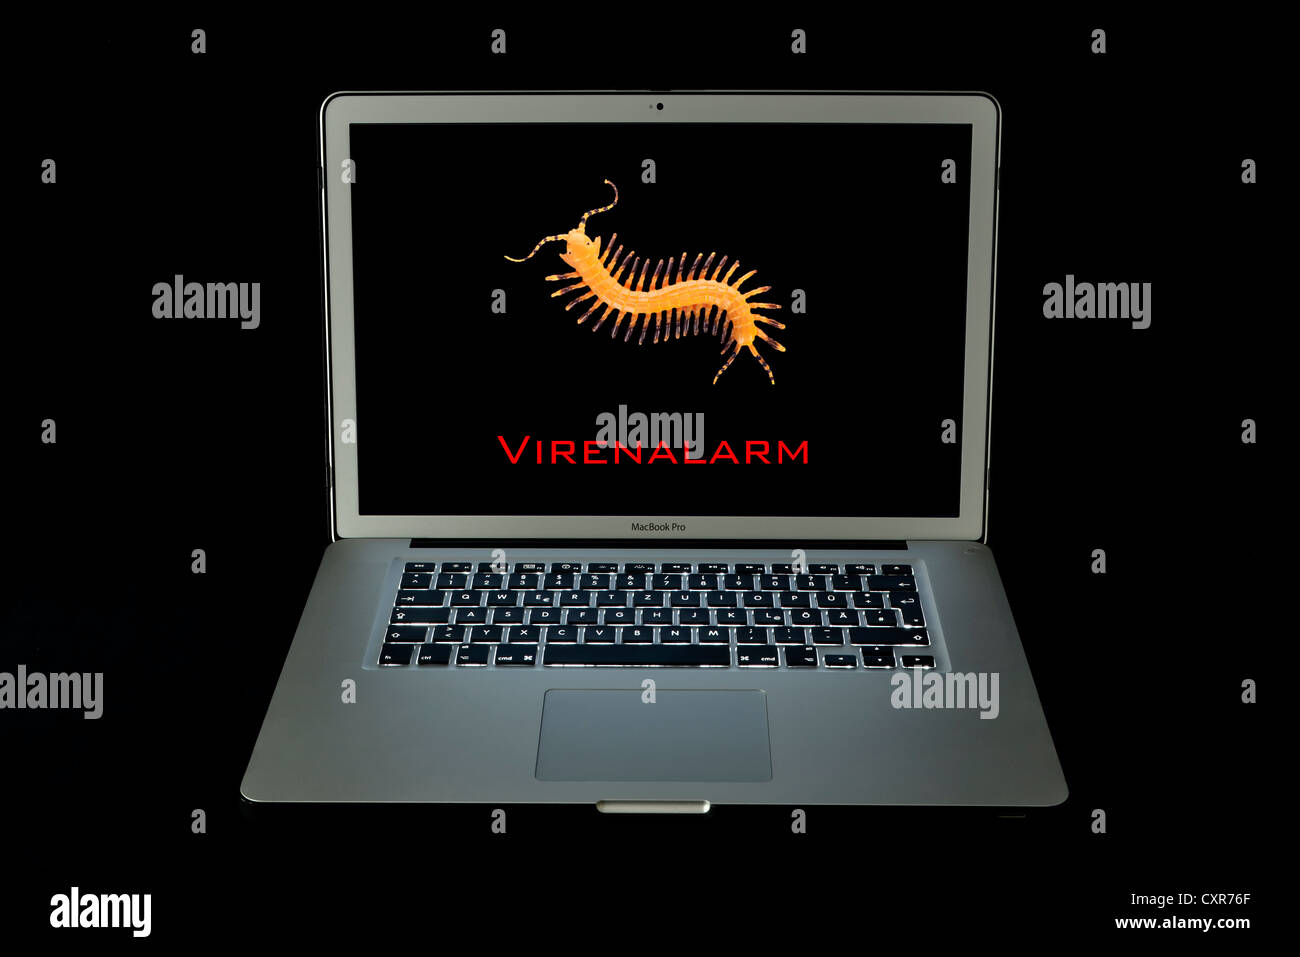 "Virenalarm', Alemán para virus alerta, alerta de virus, ordenador portátil Apple MacBook Pro Foto de stock